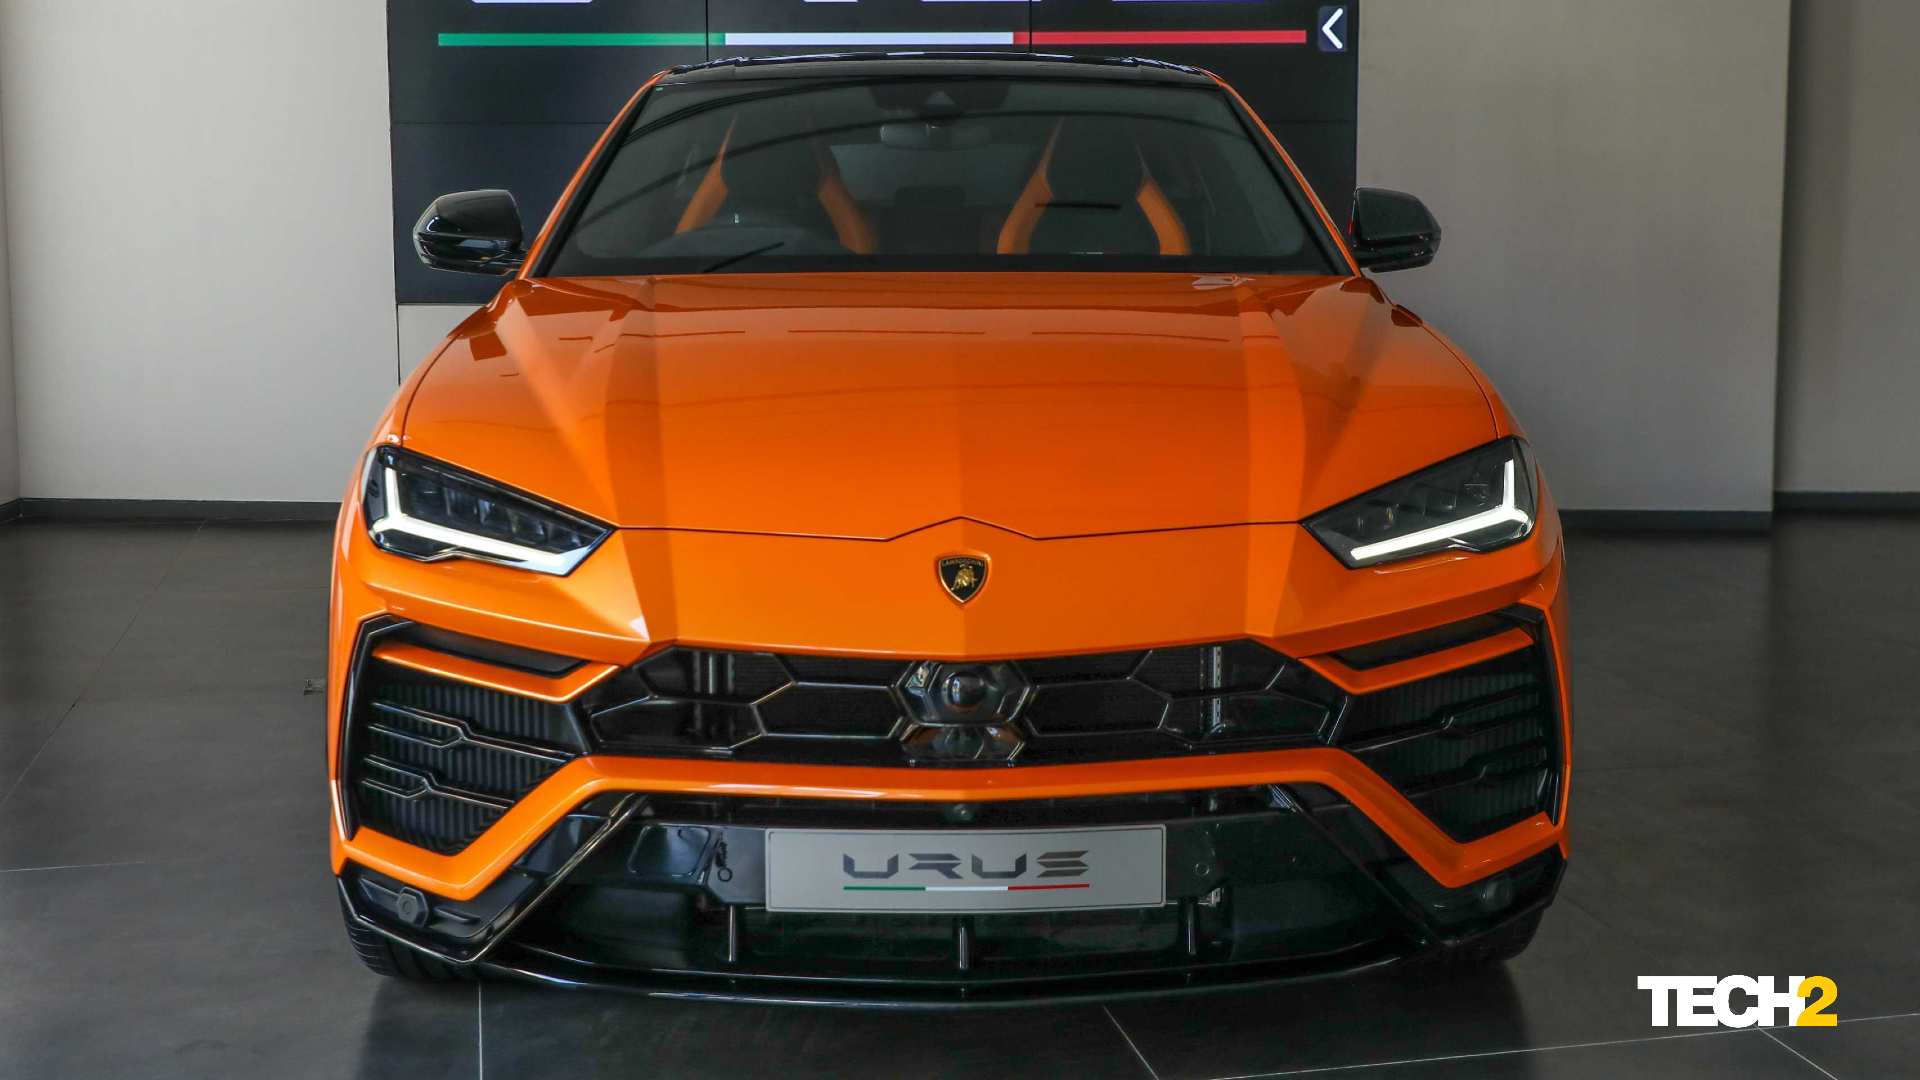  Lamborghini Urus Pearl Capsule Edition launched in India at Rs 3.43 crore